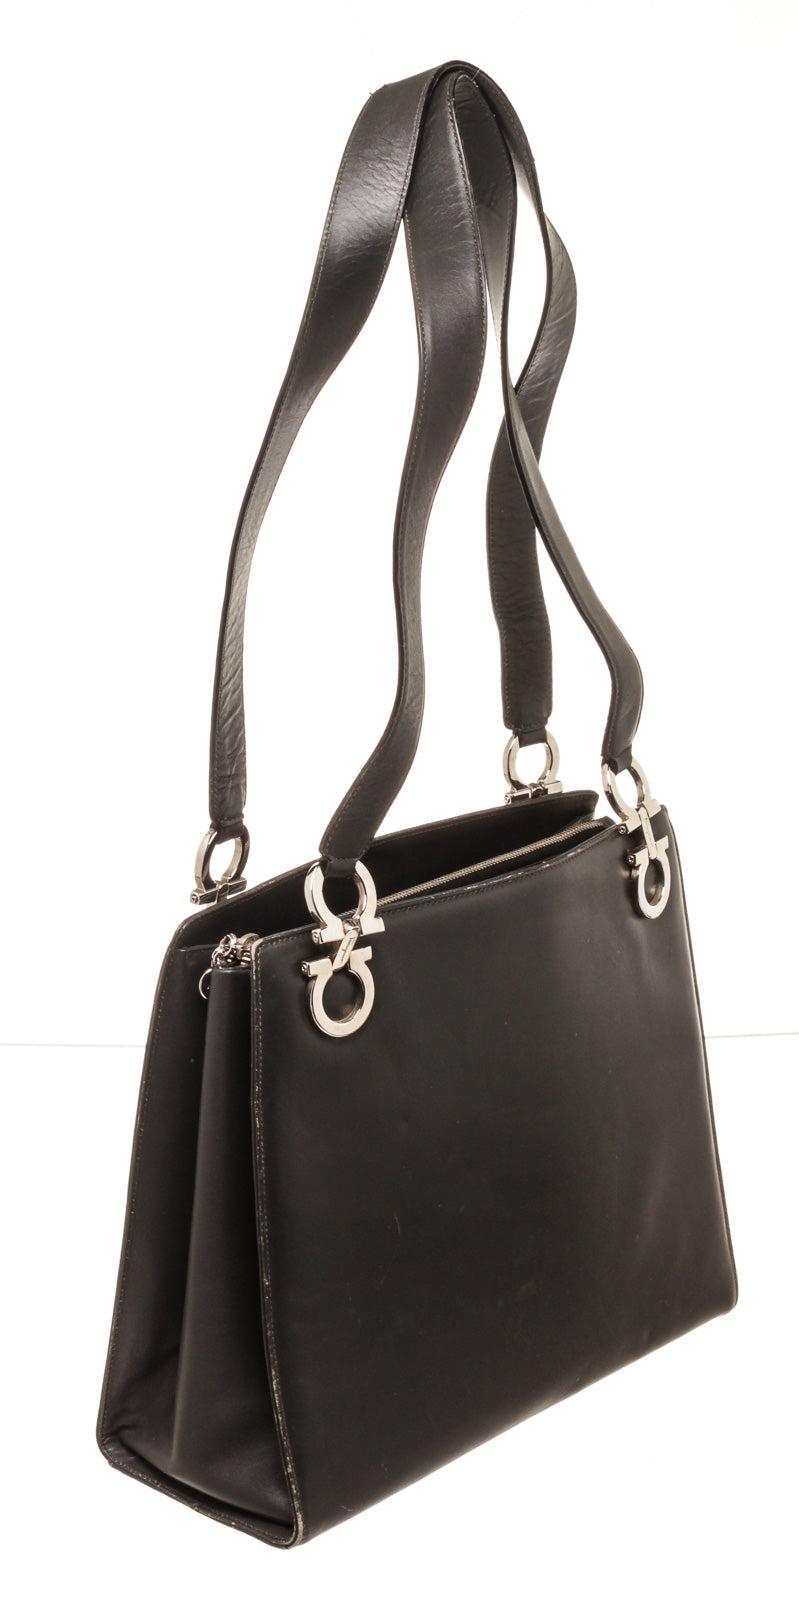 Salvatore Ferragamo Black Leather Gancini Shoulder Bag with material leather, gold tone hardware, interior zip pockets, leather lining, shoulder strap and zipper closure.
38182MSC